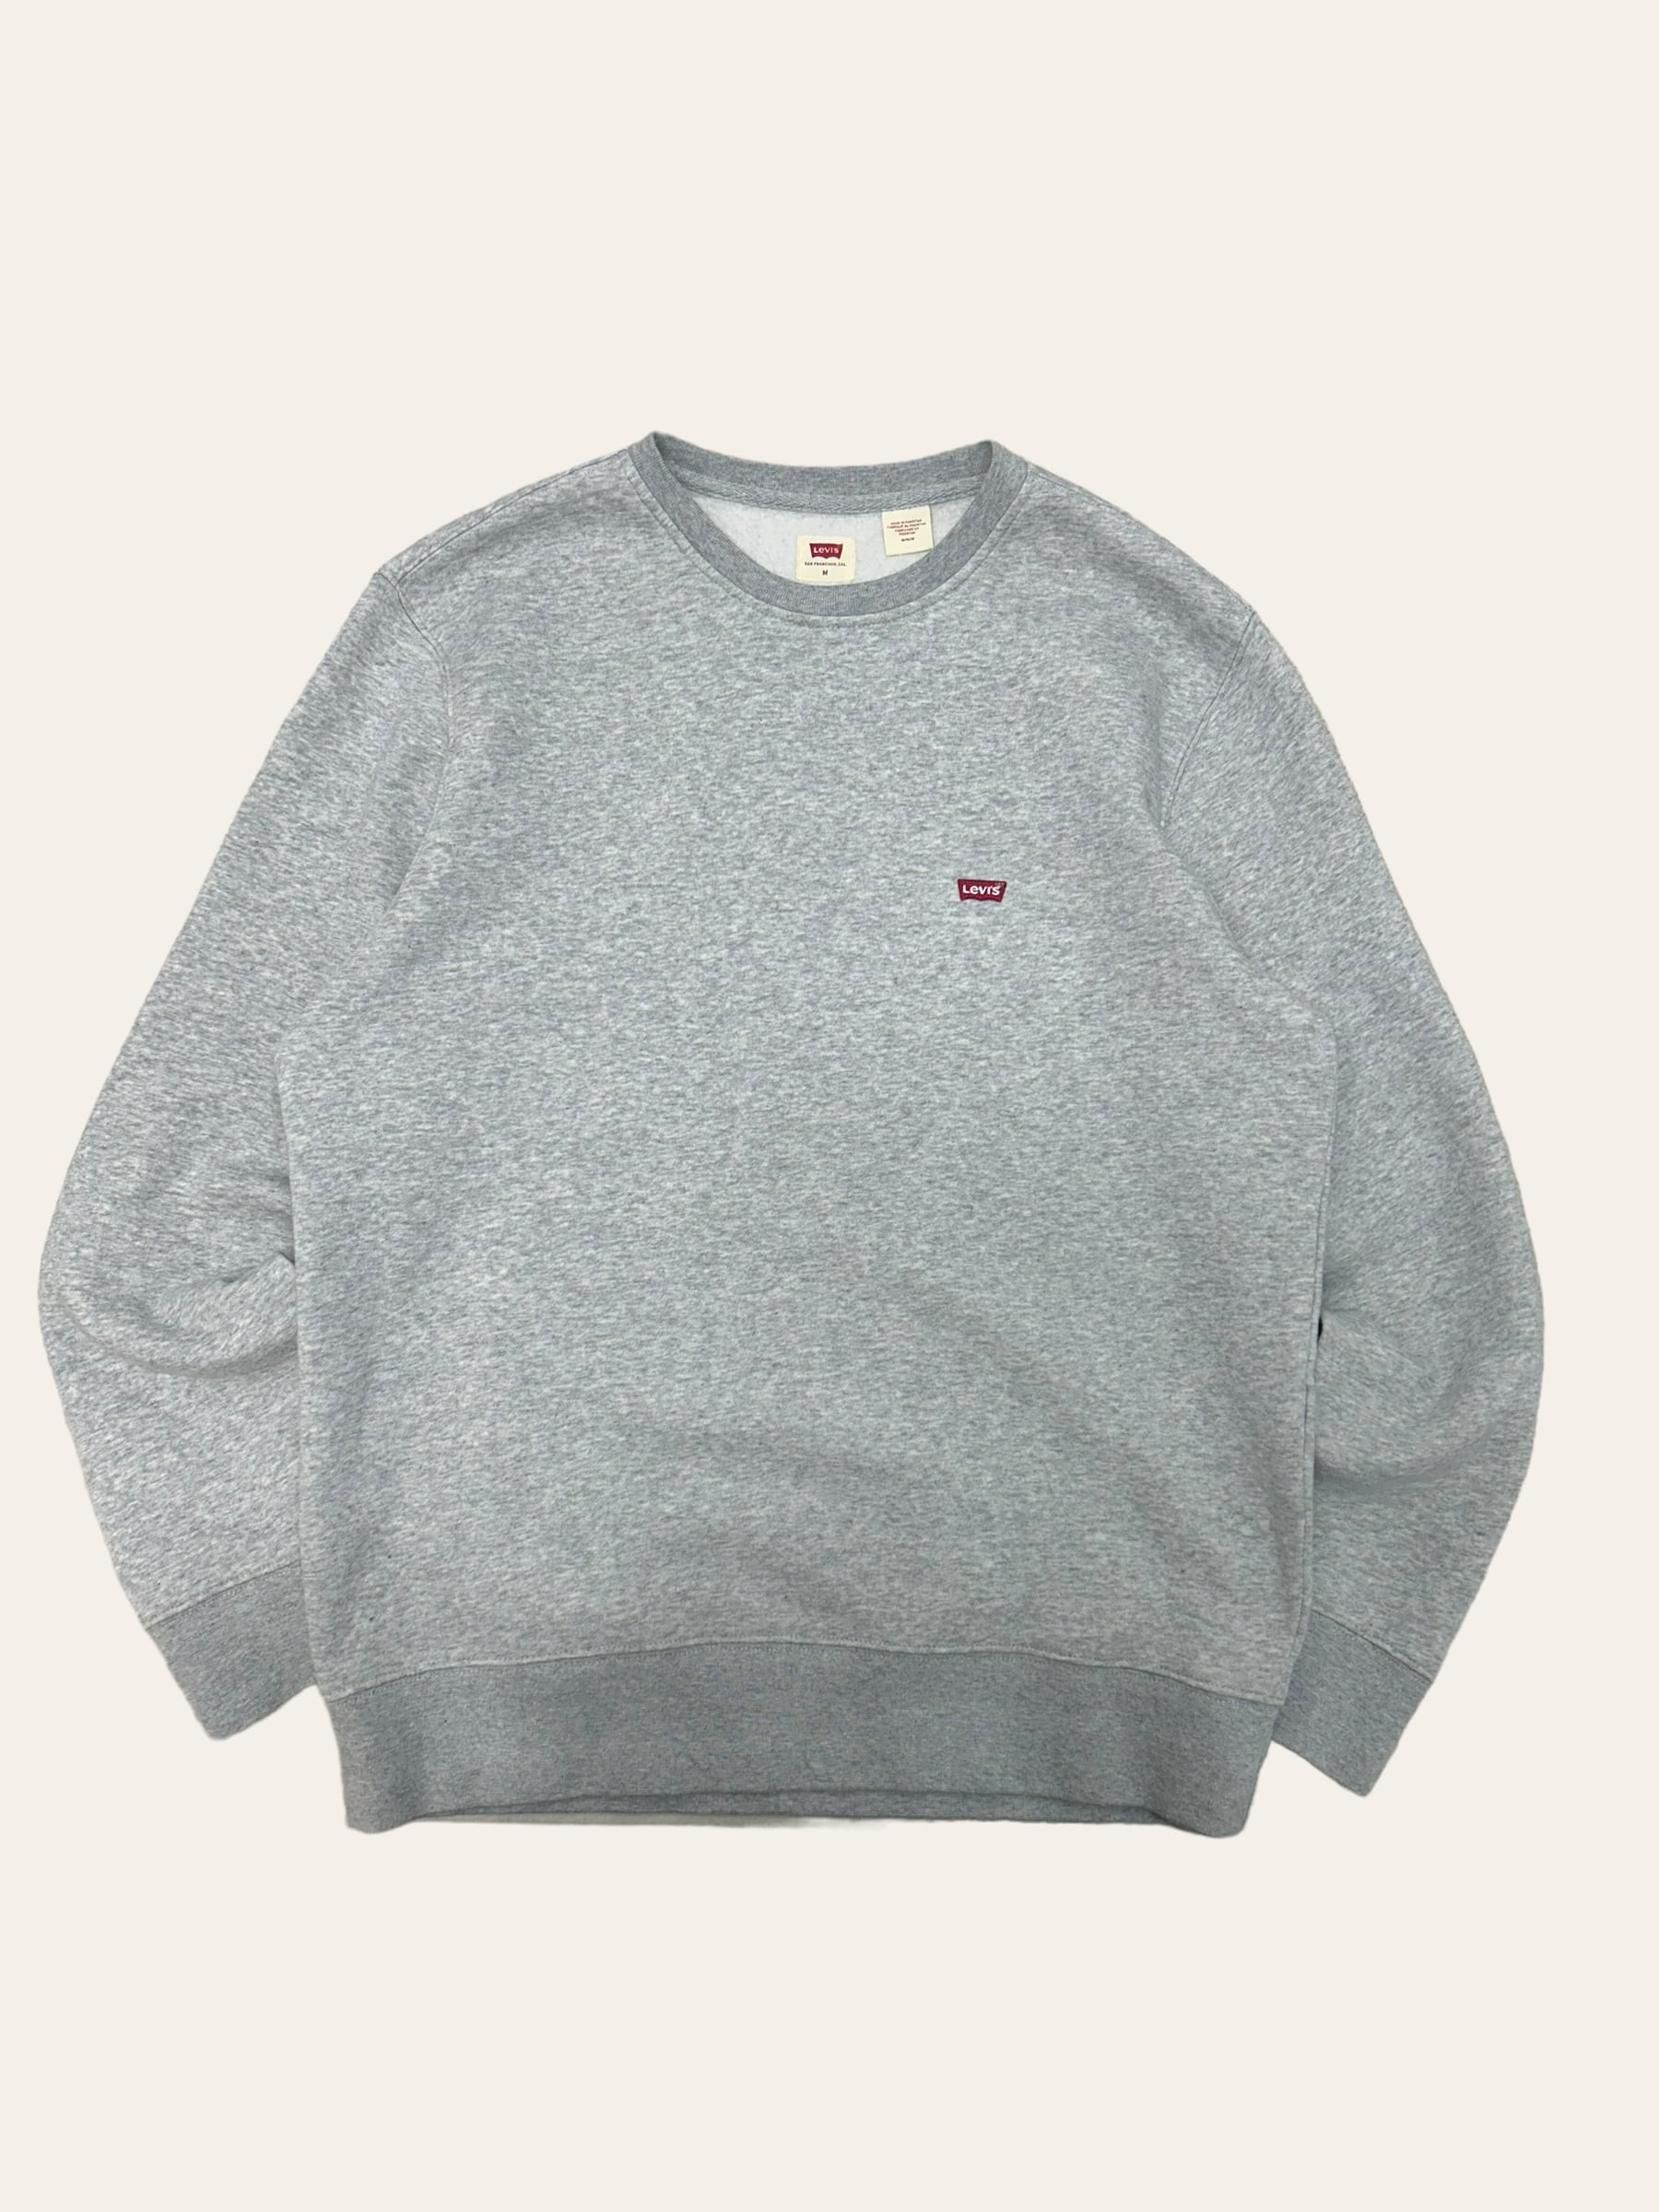 Levis gray cotton logo sweatshirt M